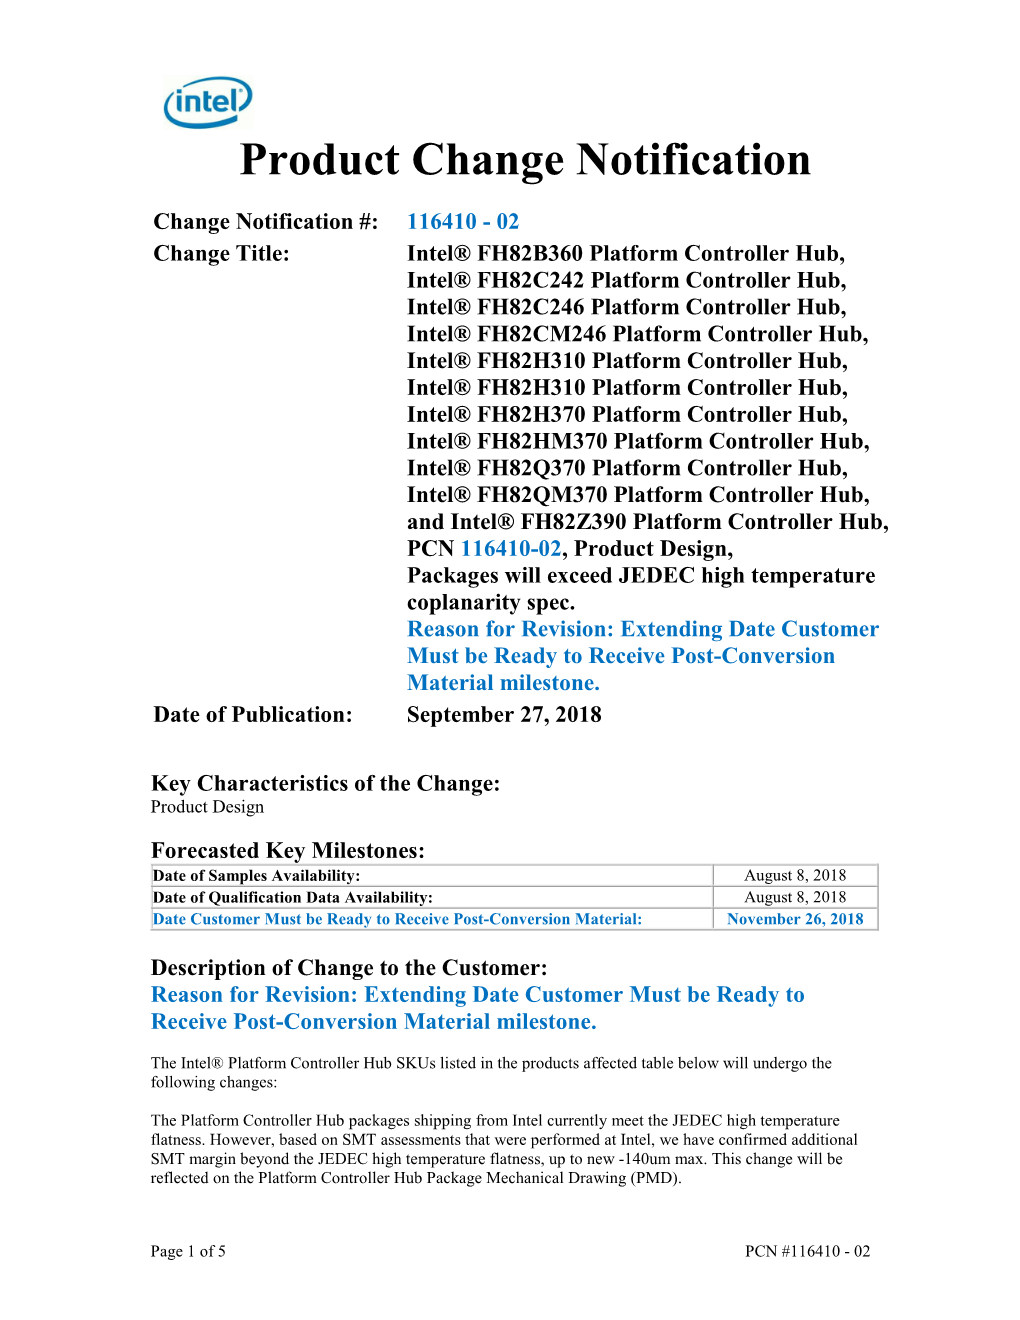 Product Change Notification 116410 - 02